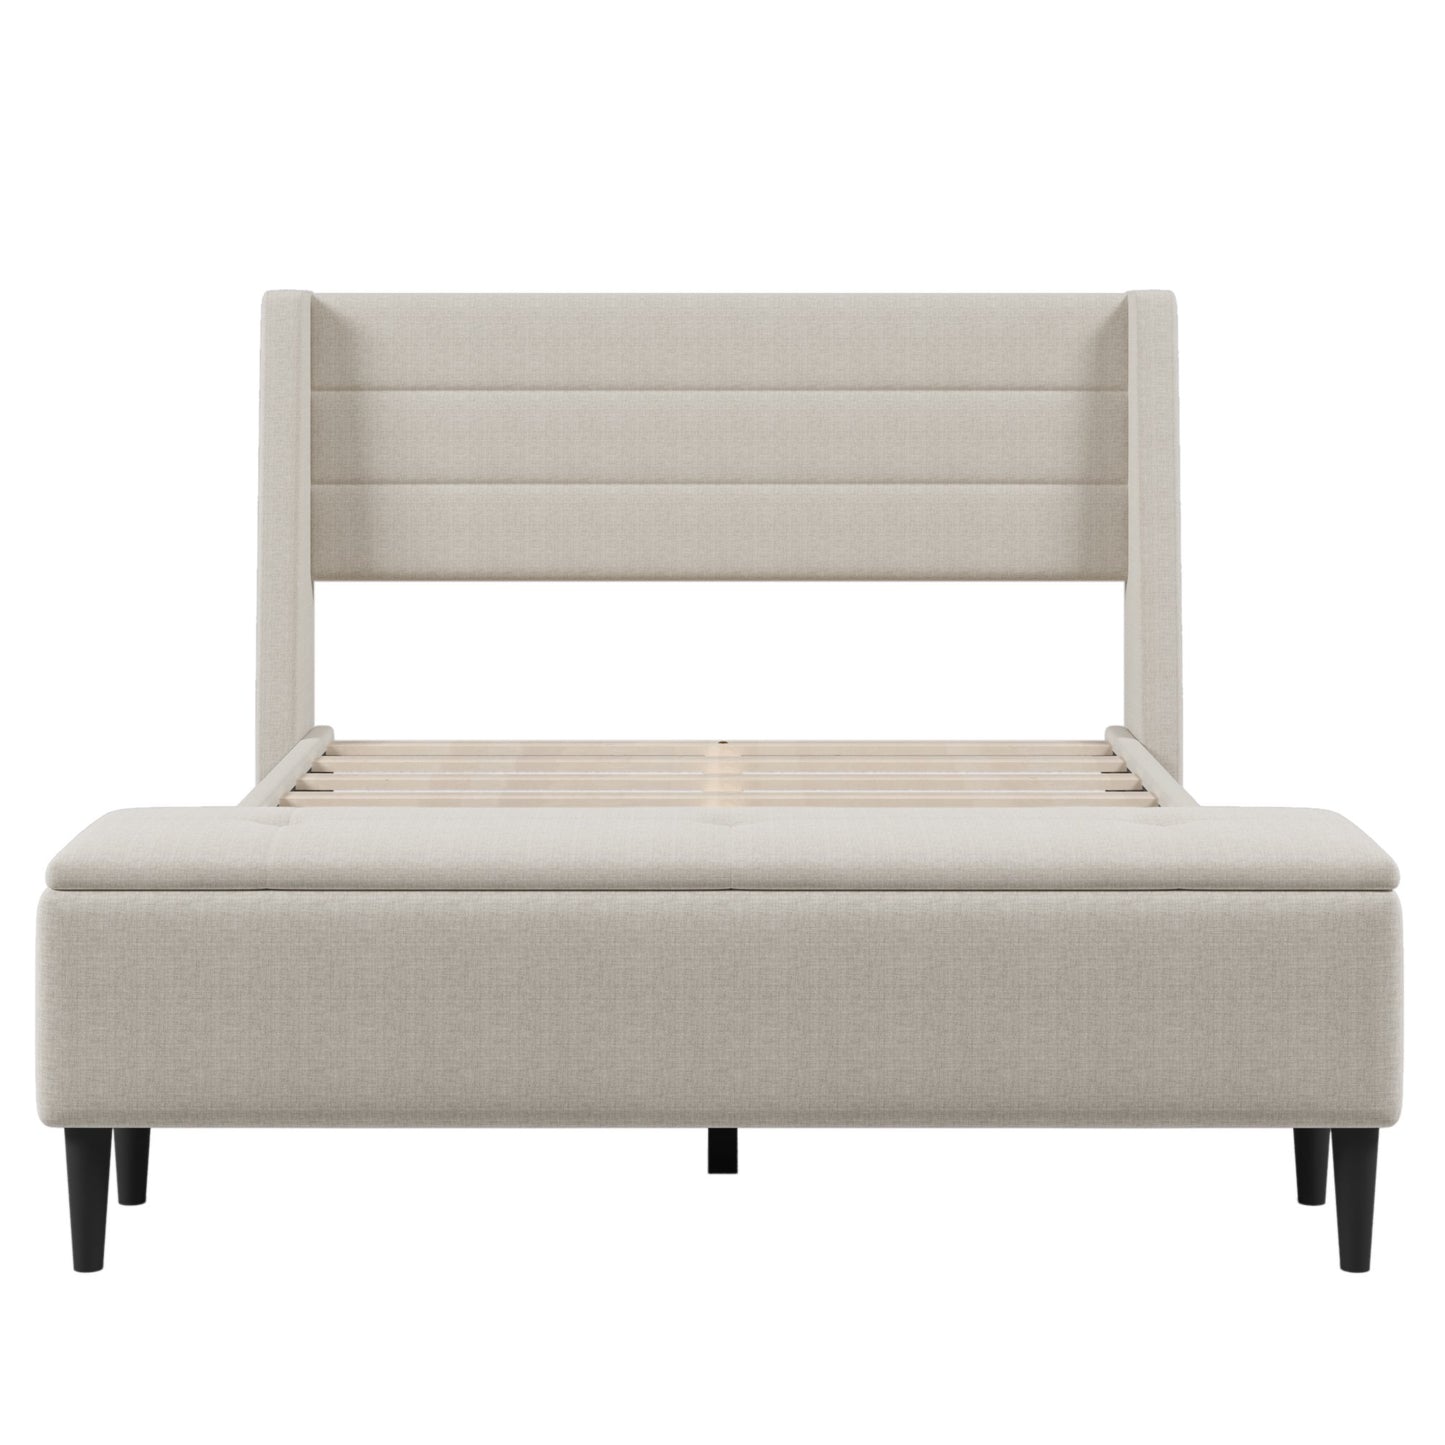 Gewnee Upholstered Queen Size Platform Bed Frame with Storage Ottoman Bench and Headboard,Beige